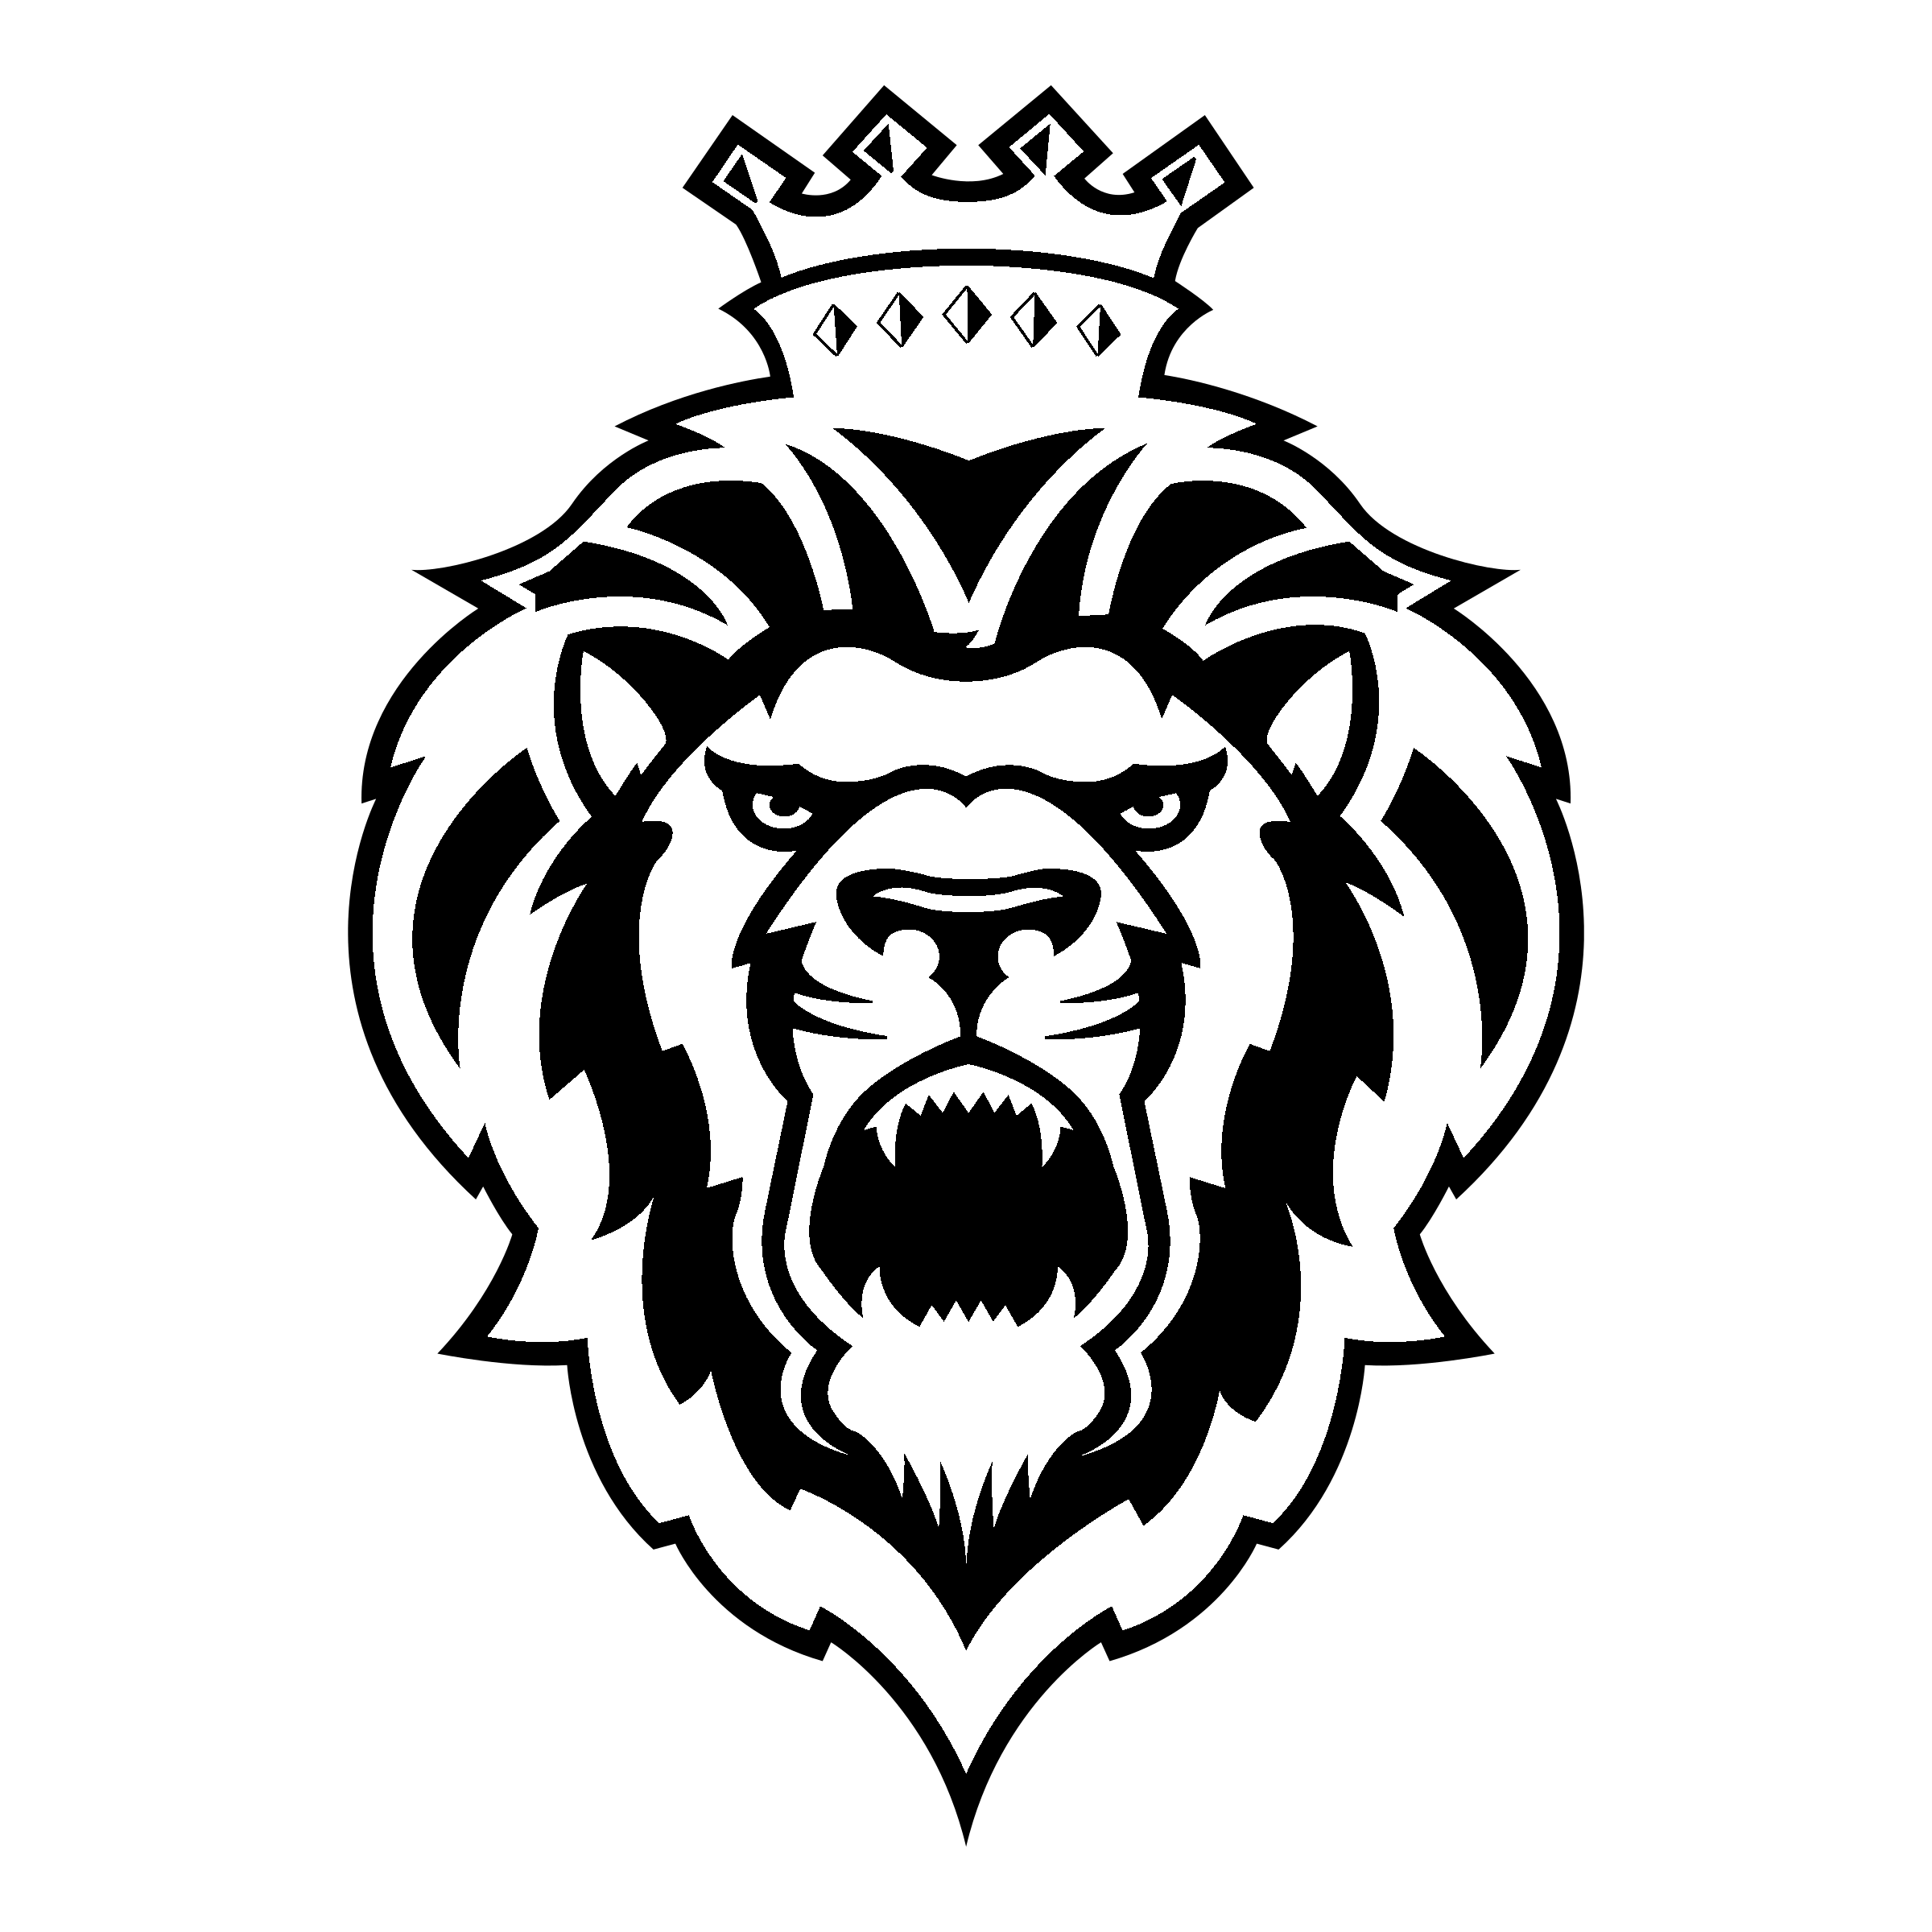 Transparent Royals Logo - Reading Royals Logo PNG Transparent & SVG Vector